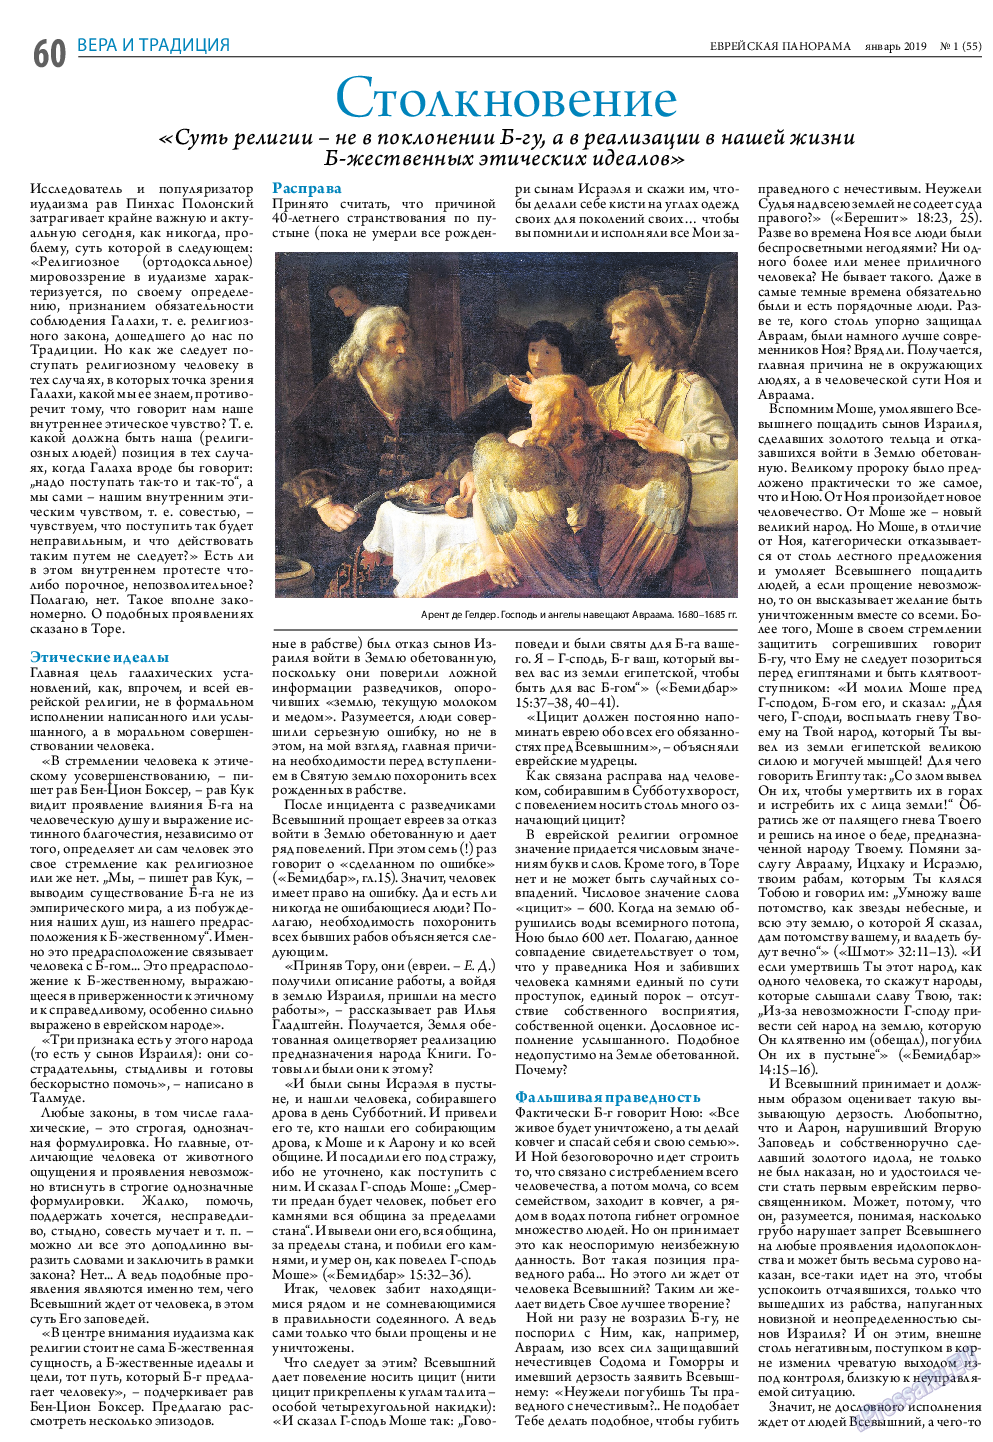 Еврейская панорама, газета. 2019 №1 стр.60